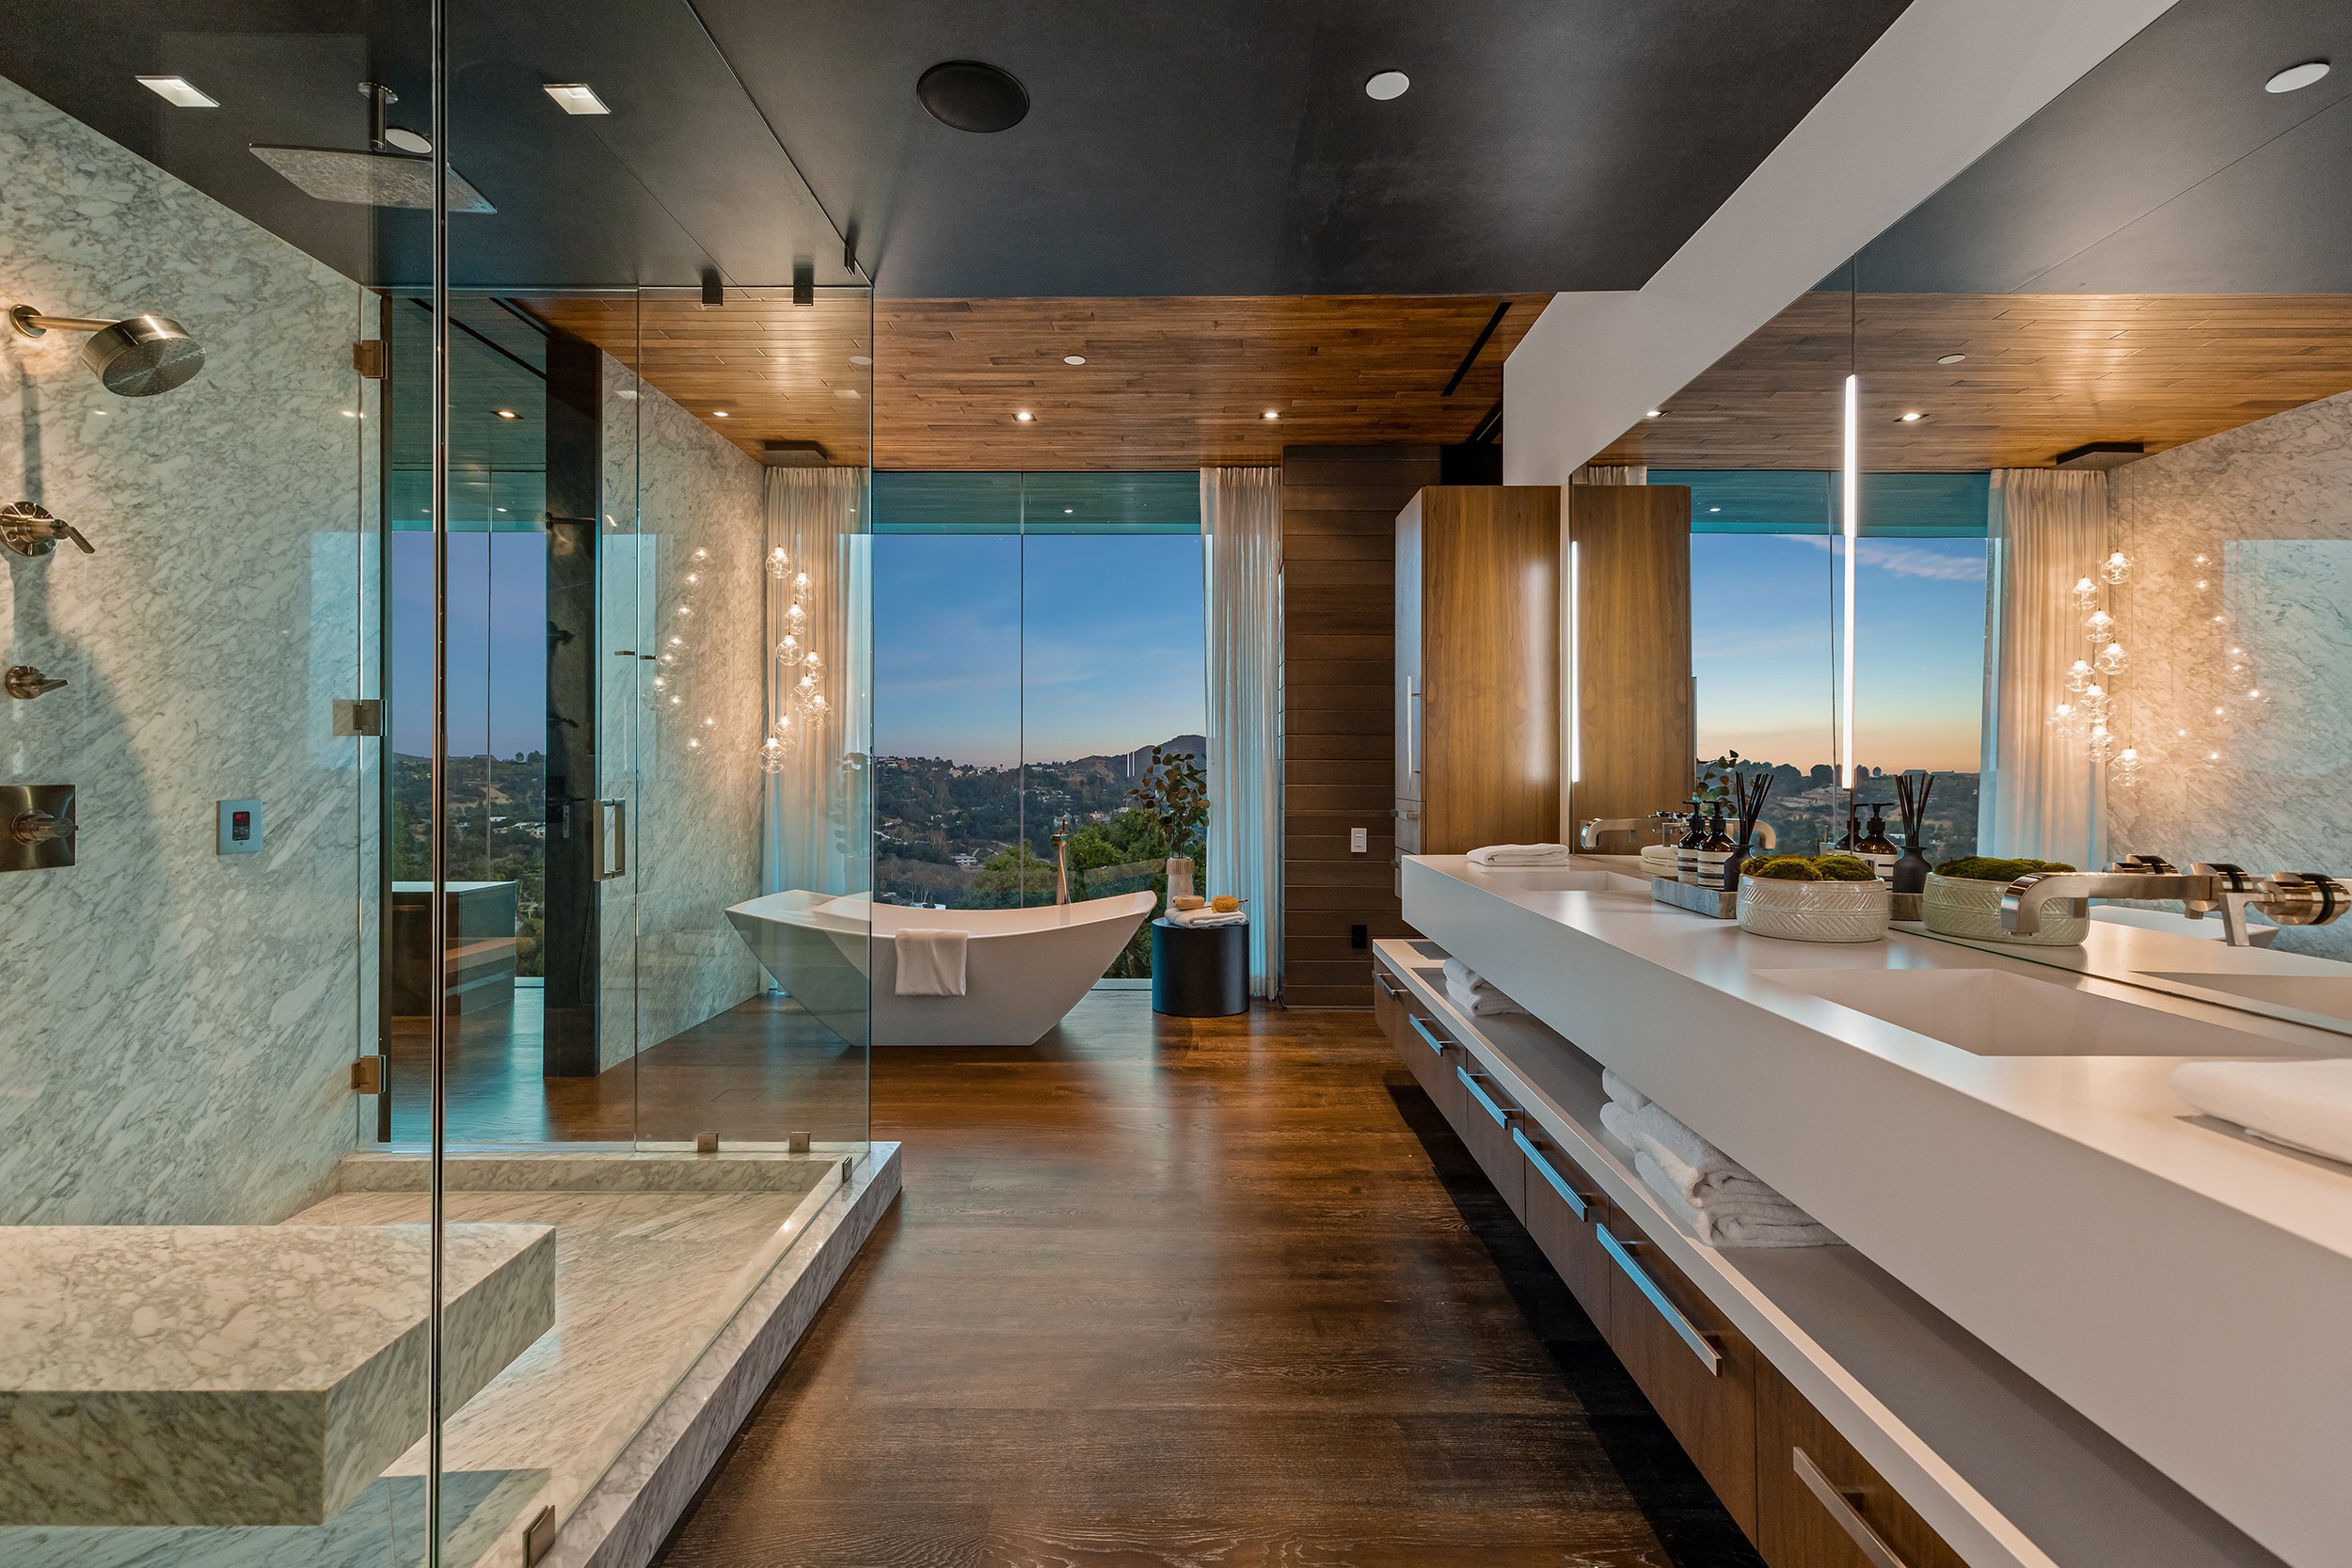 7 Ideas for a Modern Style Bathroom Interior Design | Beautiful Homes